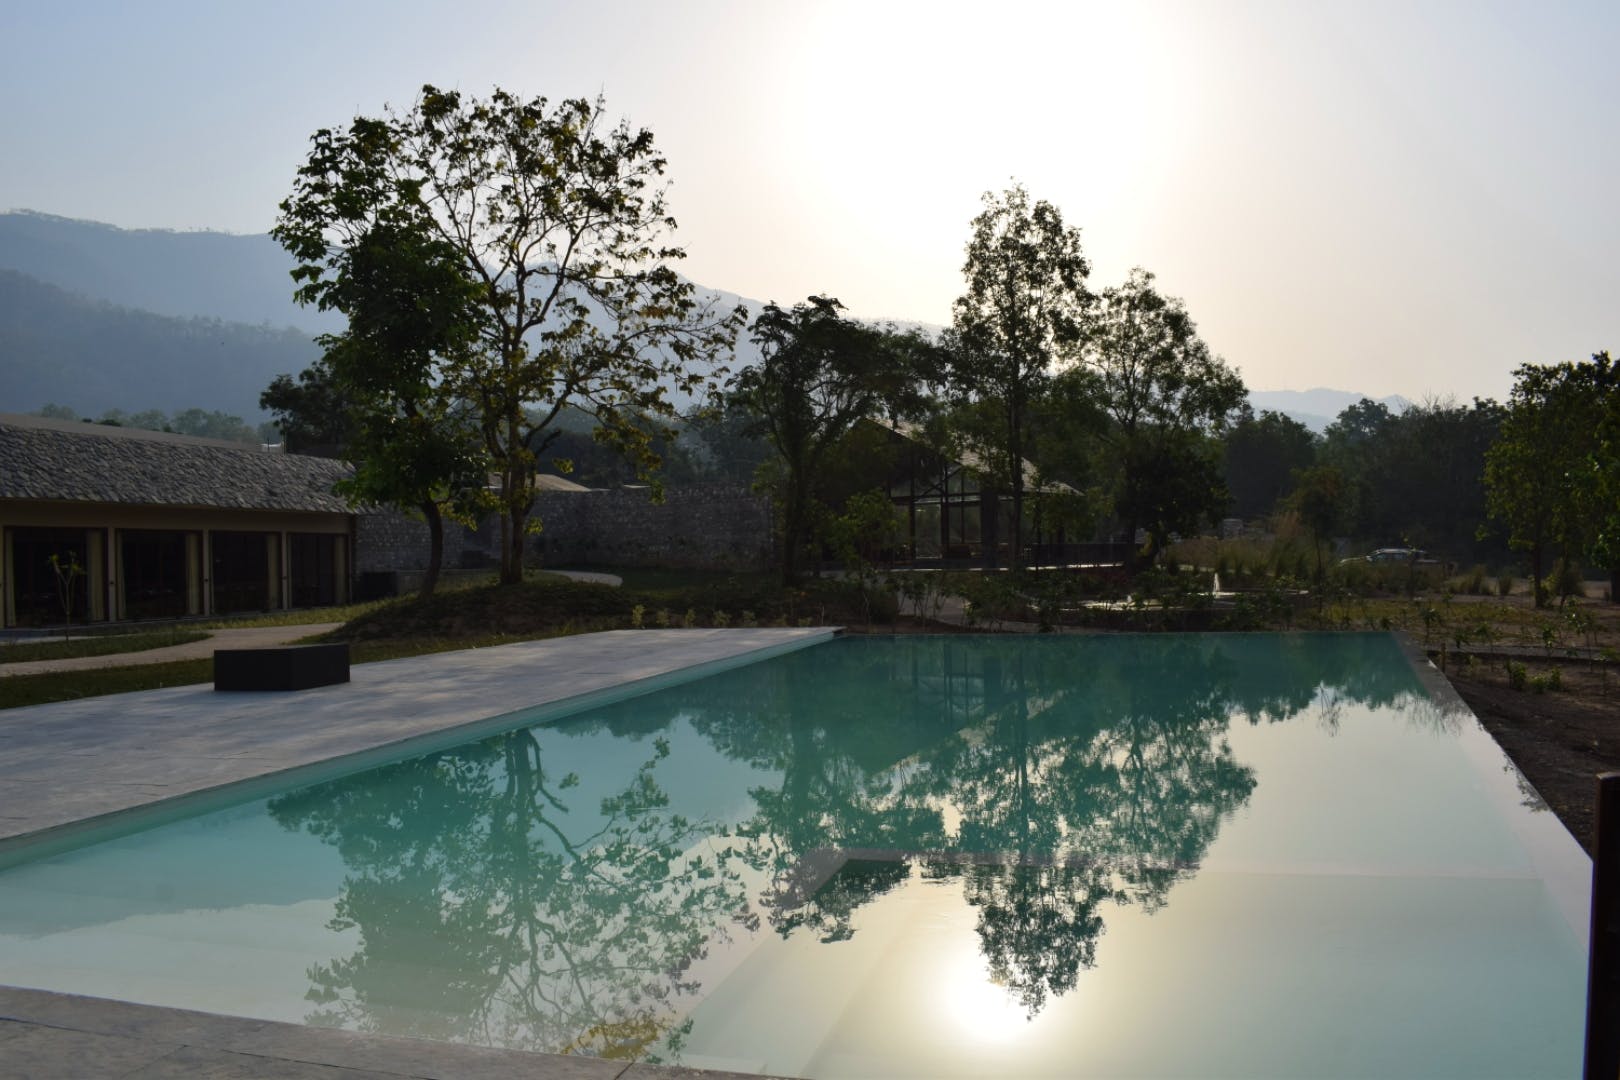 Swimming pool,Property,Resort,Reflecting pool,Water,House,Tree,Estate,Leisure,Real estate